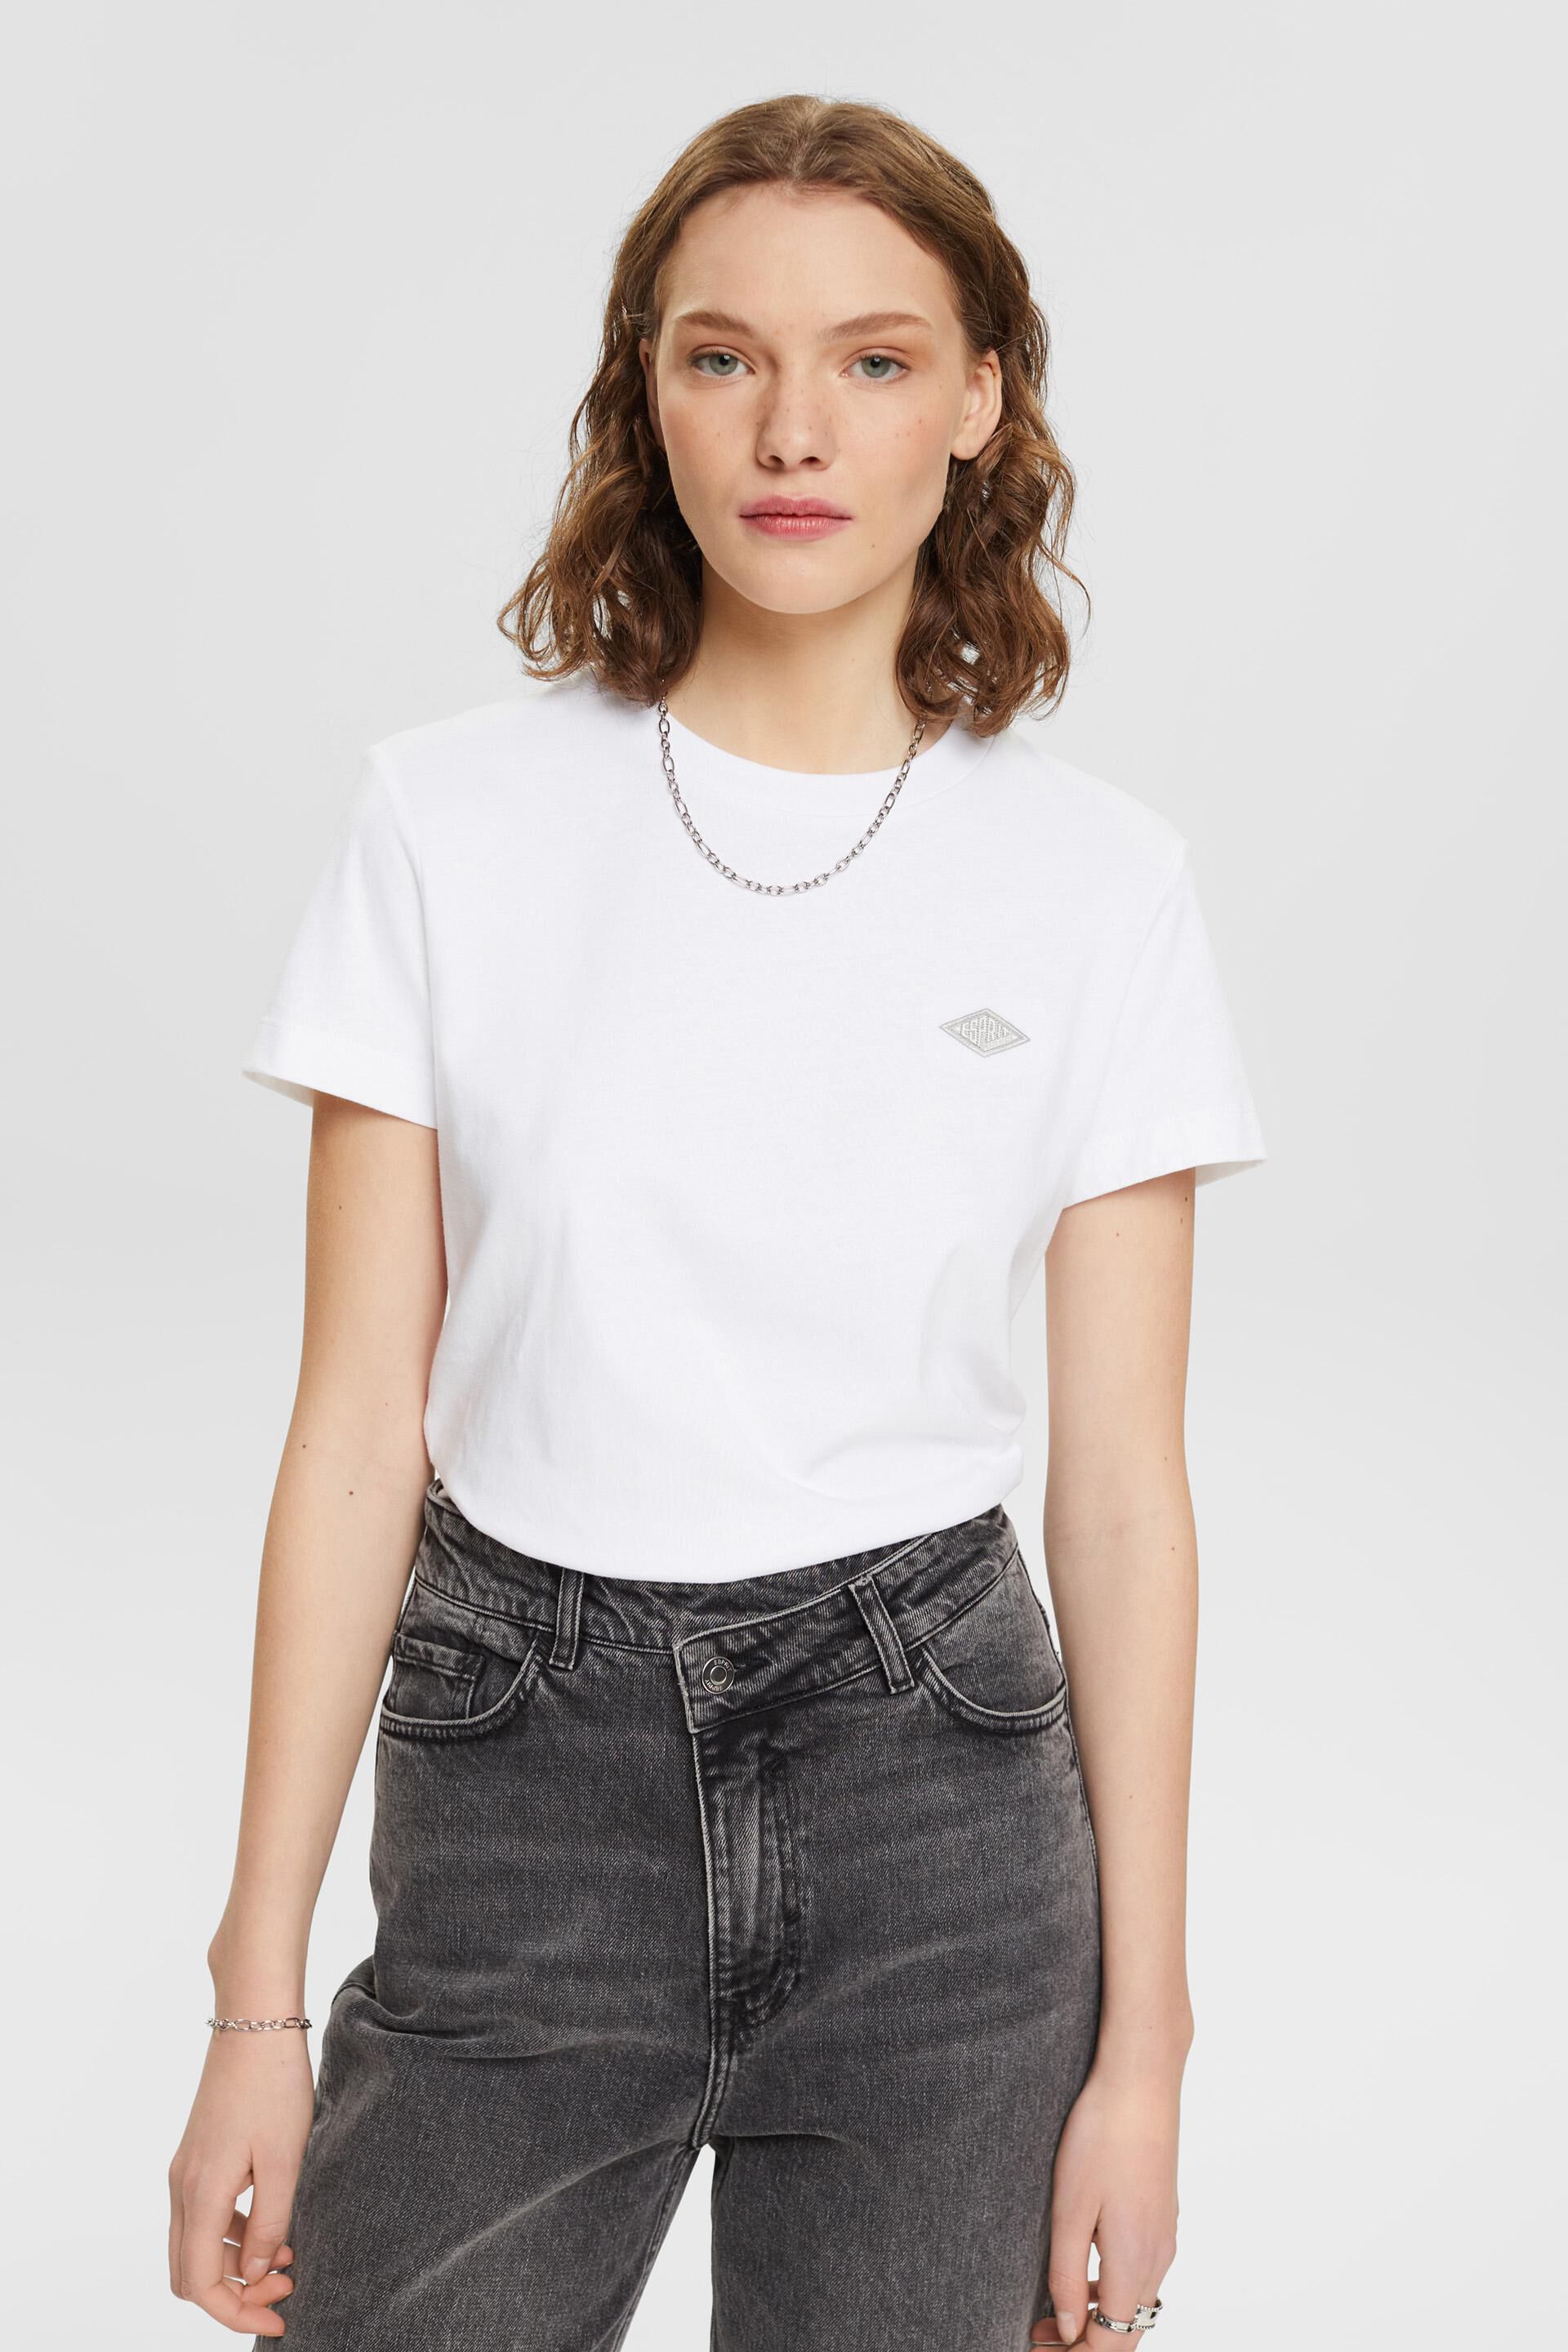 Esprit Damen Baumwoll-T-Shirt mit gesticktem Logo